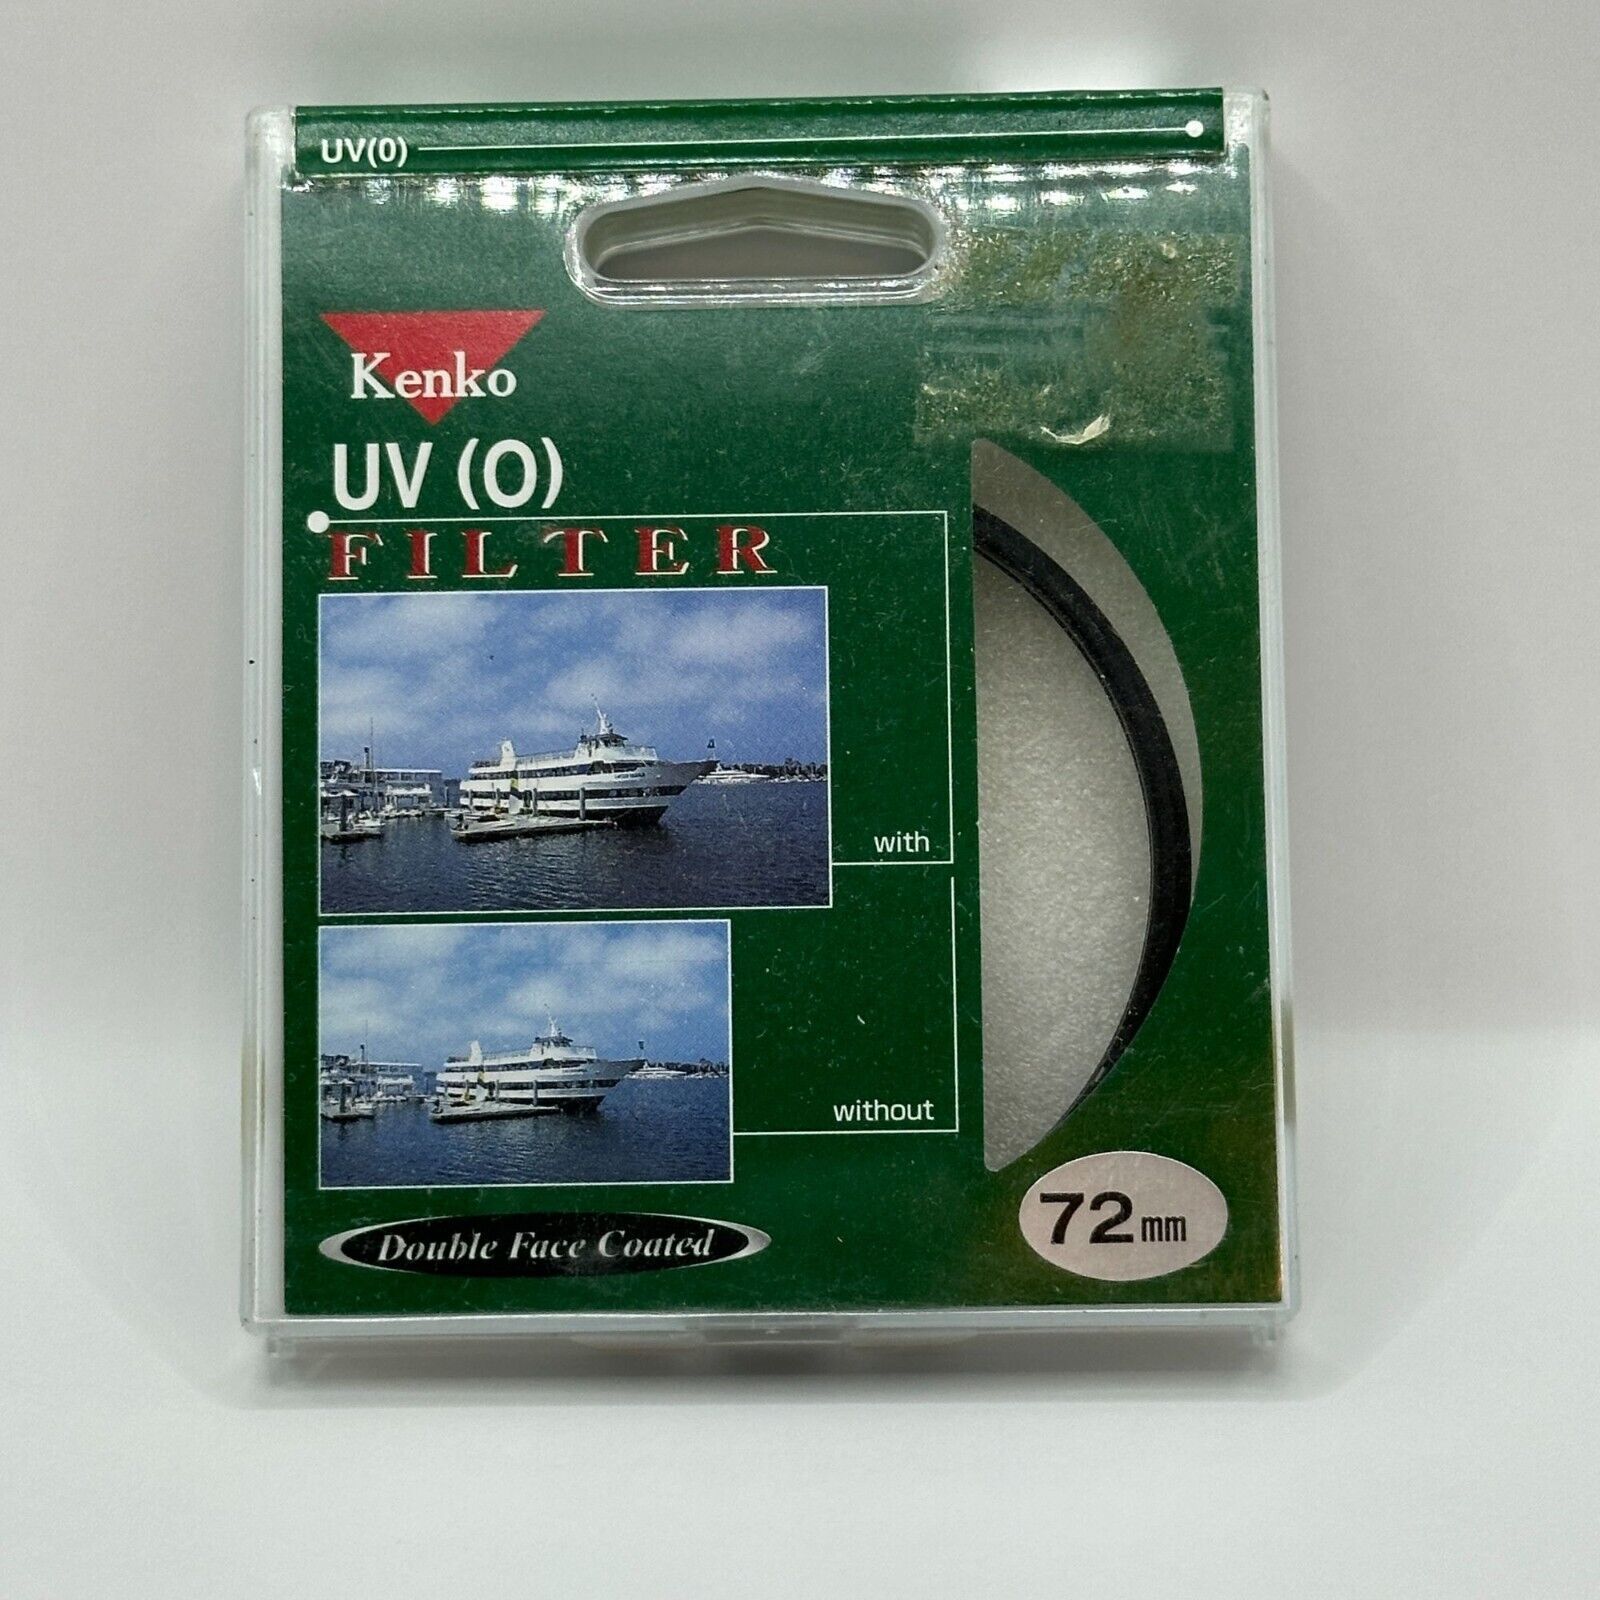 Kenko UV Camera Filter 72MM Double Face Coated - $18.50